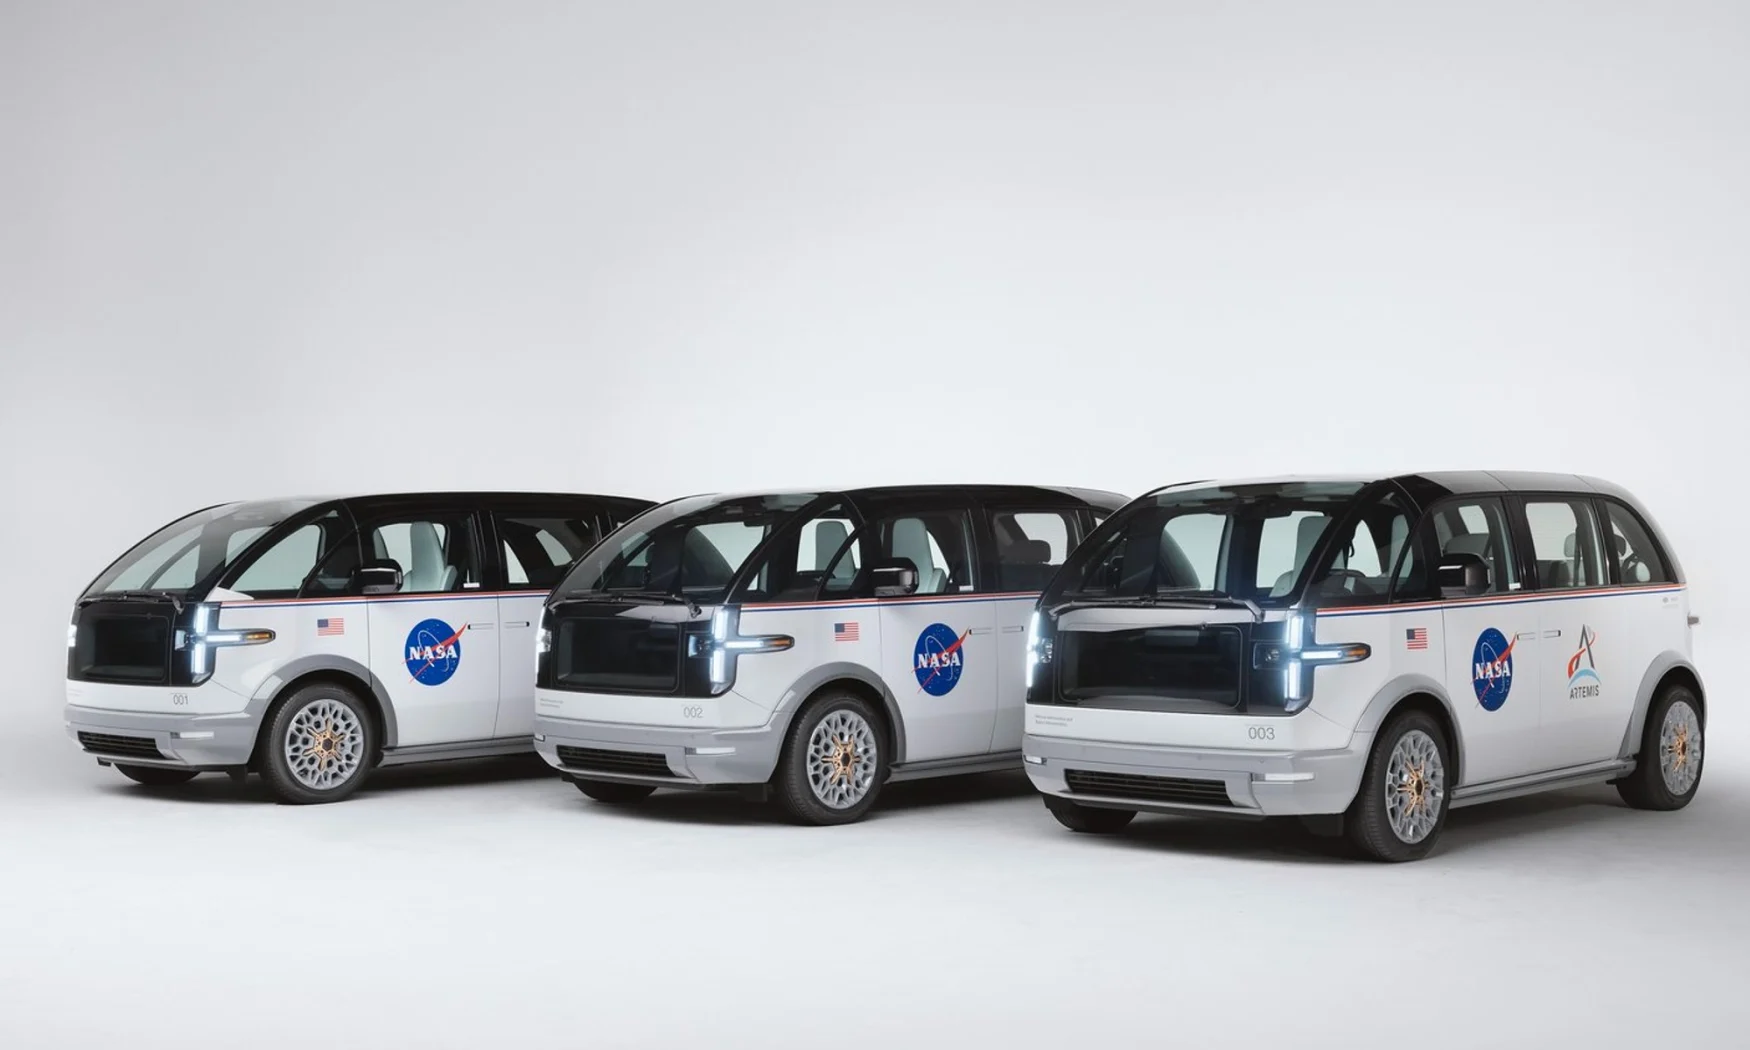 A group shot of Canoo's NASA vans. 